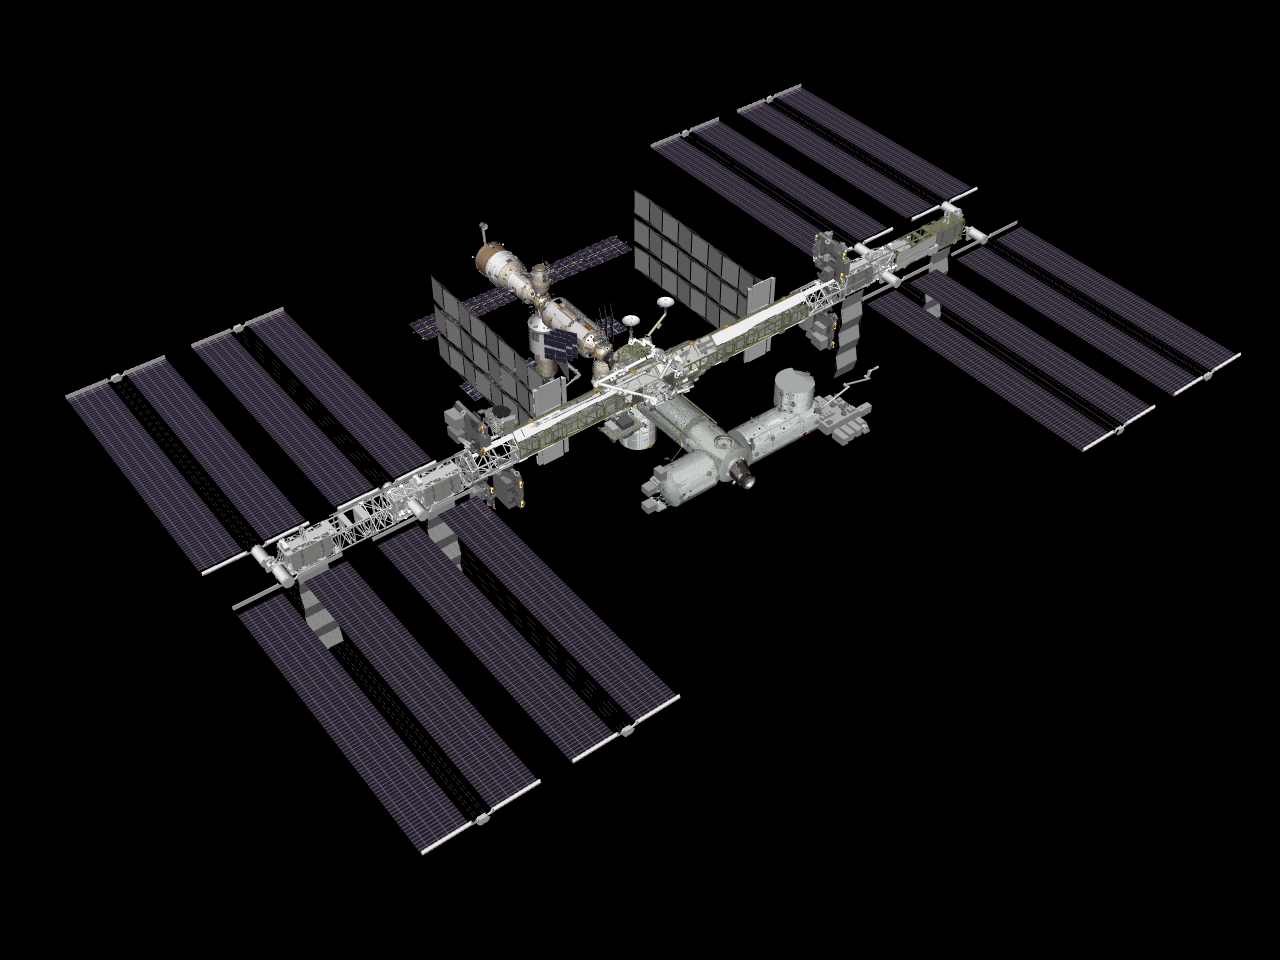 Движущаяся мкс. Космическая станция МКС. МКС 1998. ISS МКС. МКС модули 3 д модель.